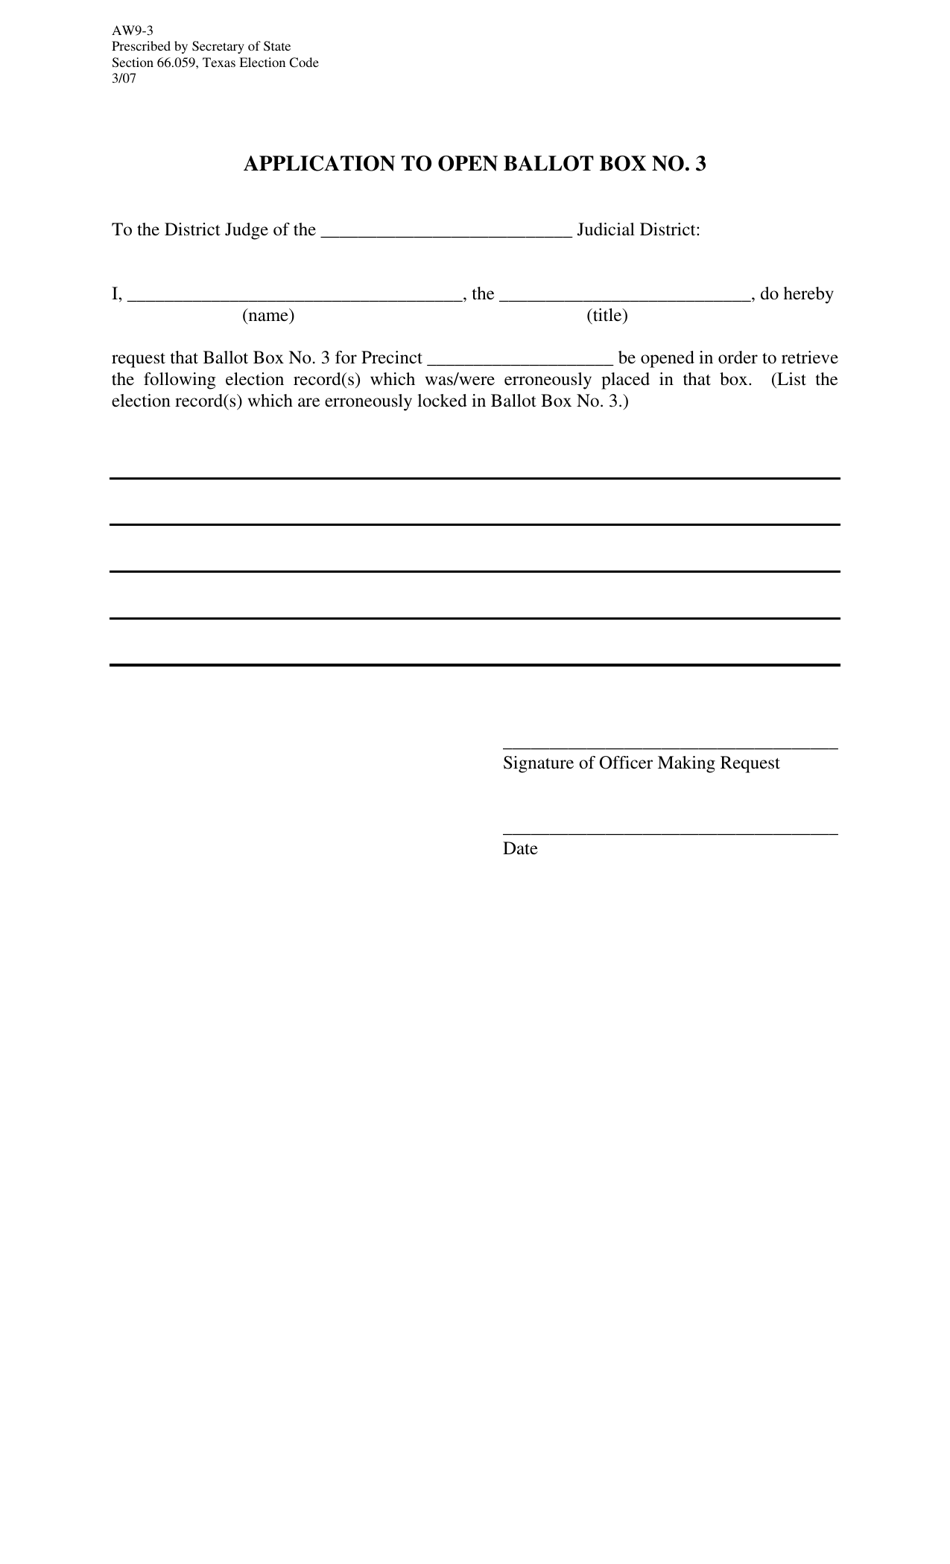 Form AW9-3 Application to Open Ballot Box No. 3 - Texas, Page 1